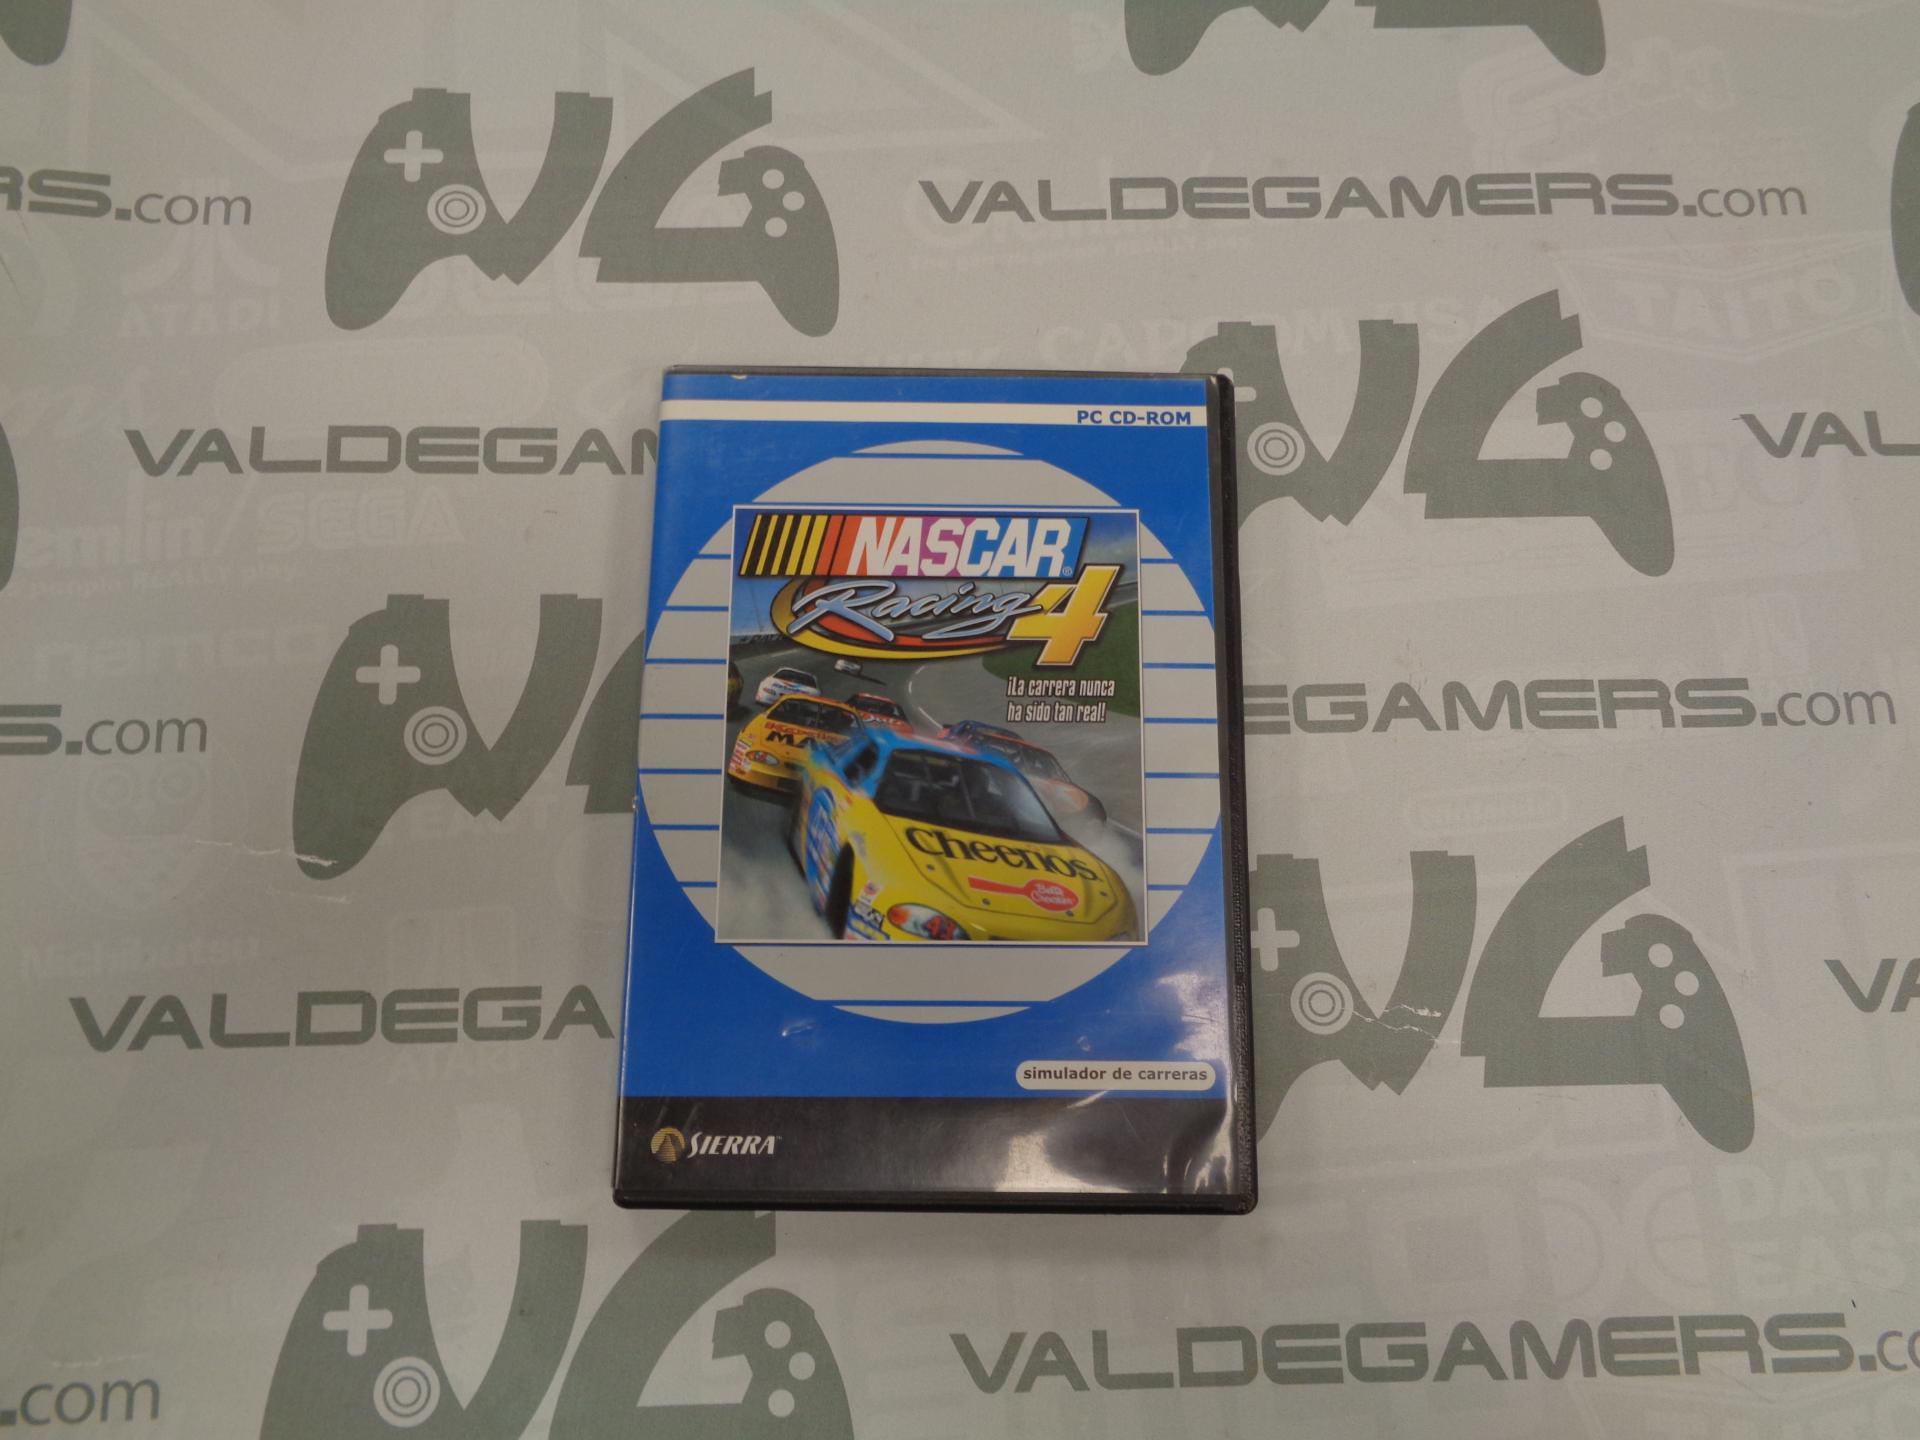 Nascar Racing 4 tienda online Nascar Racing 4 valdegamers